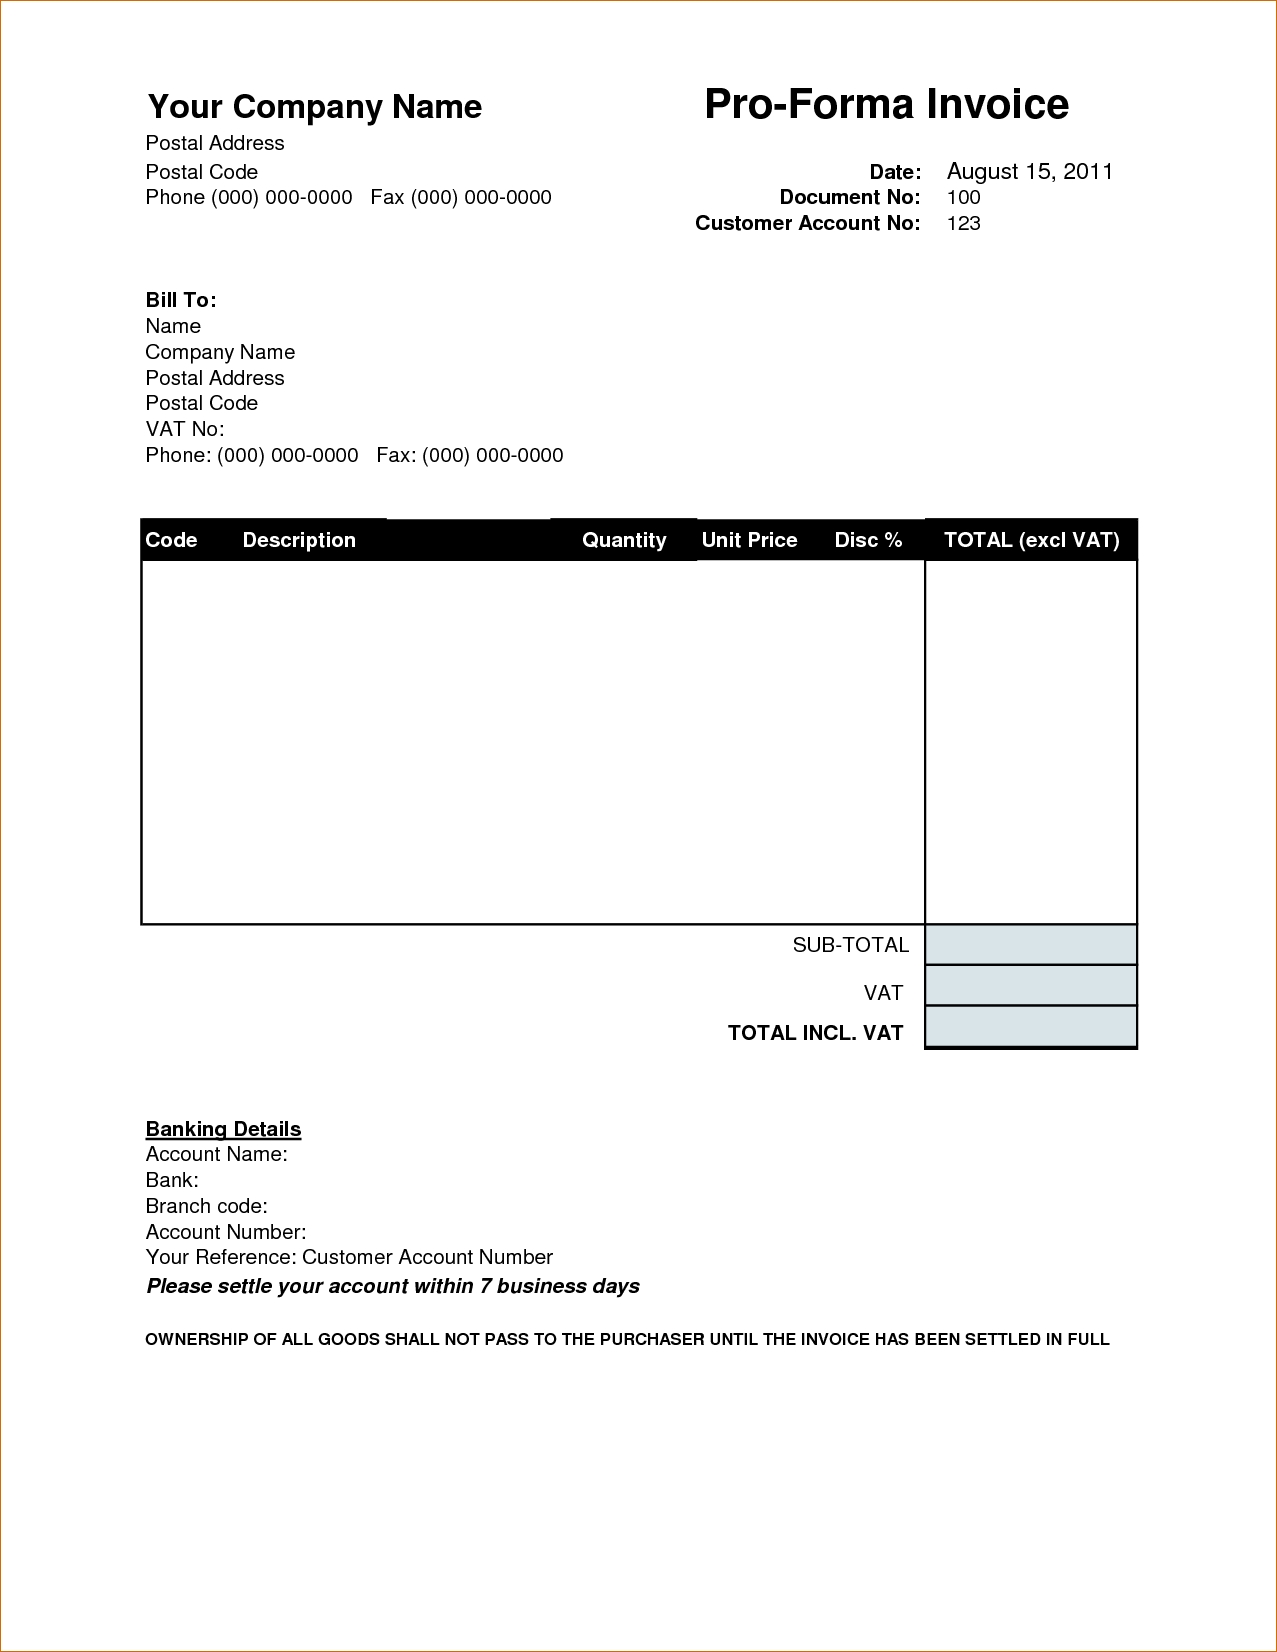 proforma invoice format in word sample of proforma invoice format of proforma invoice 1277 X 1652